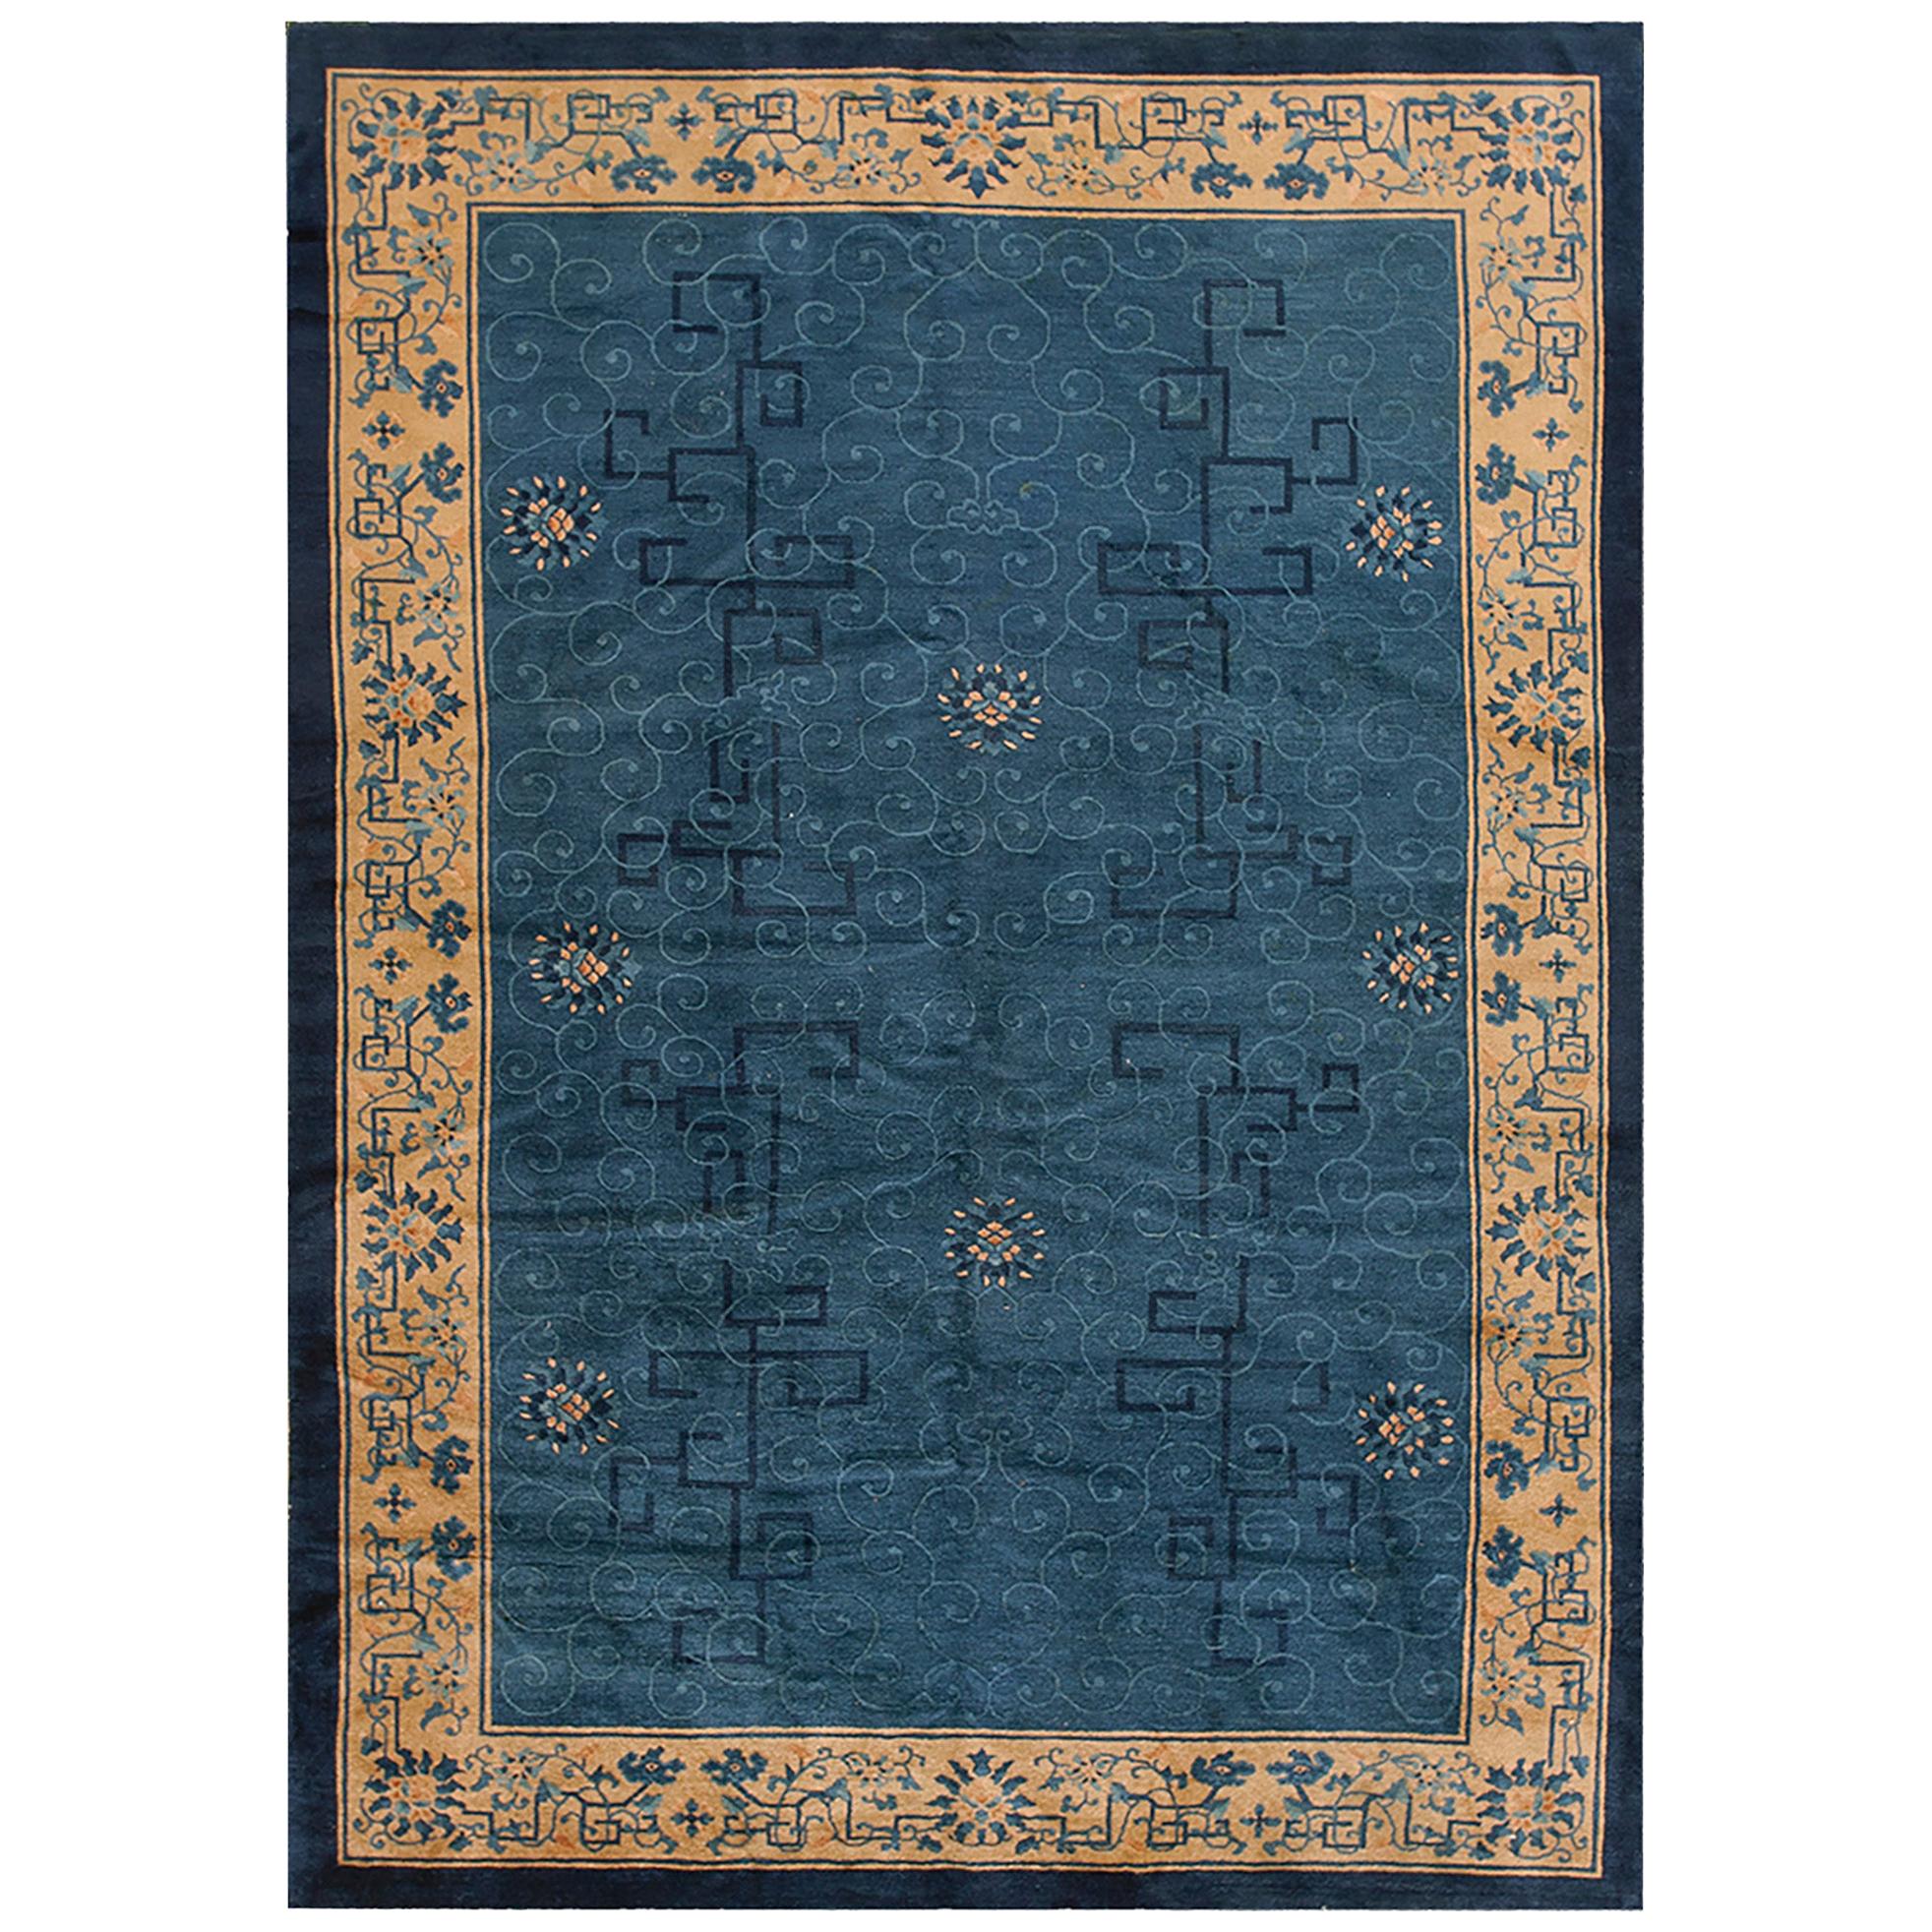 Early 20th Century Chinese Peking Carpet ( 6'2" x 9'9" - 188 x 297 ) 